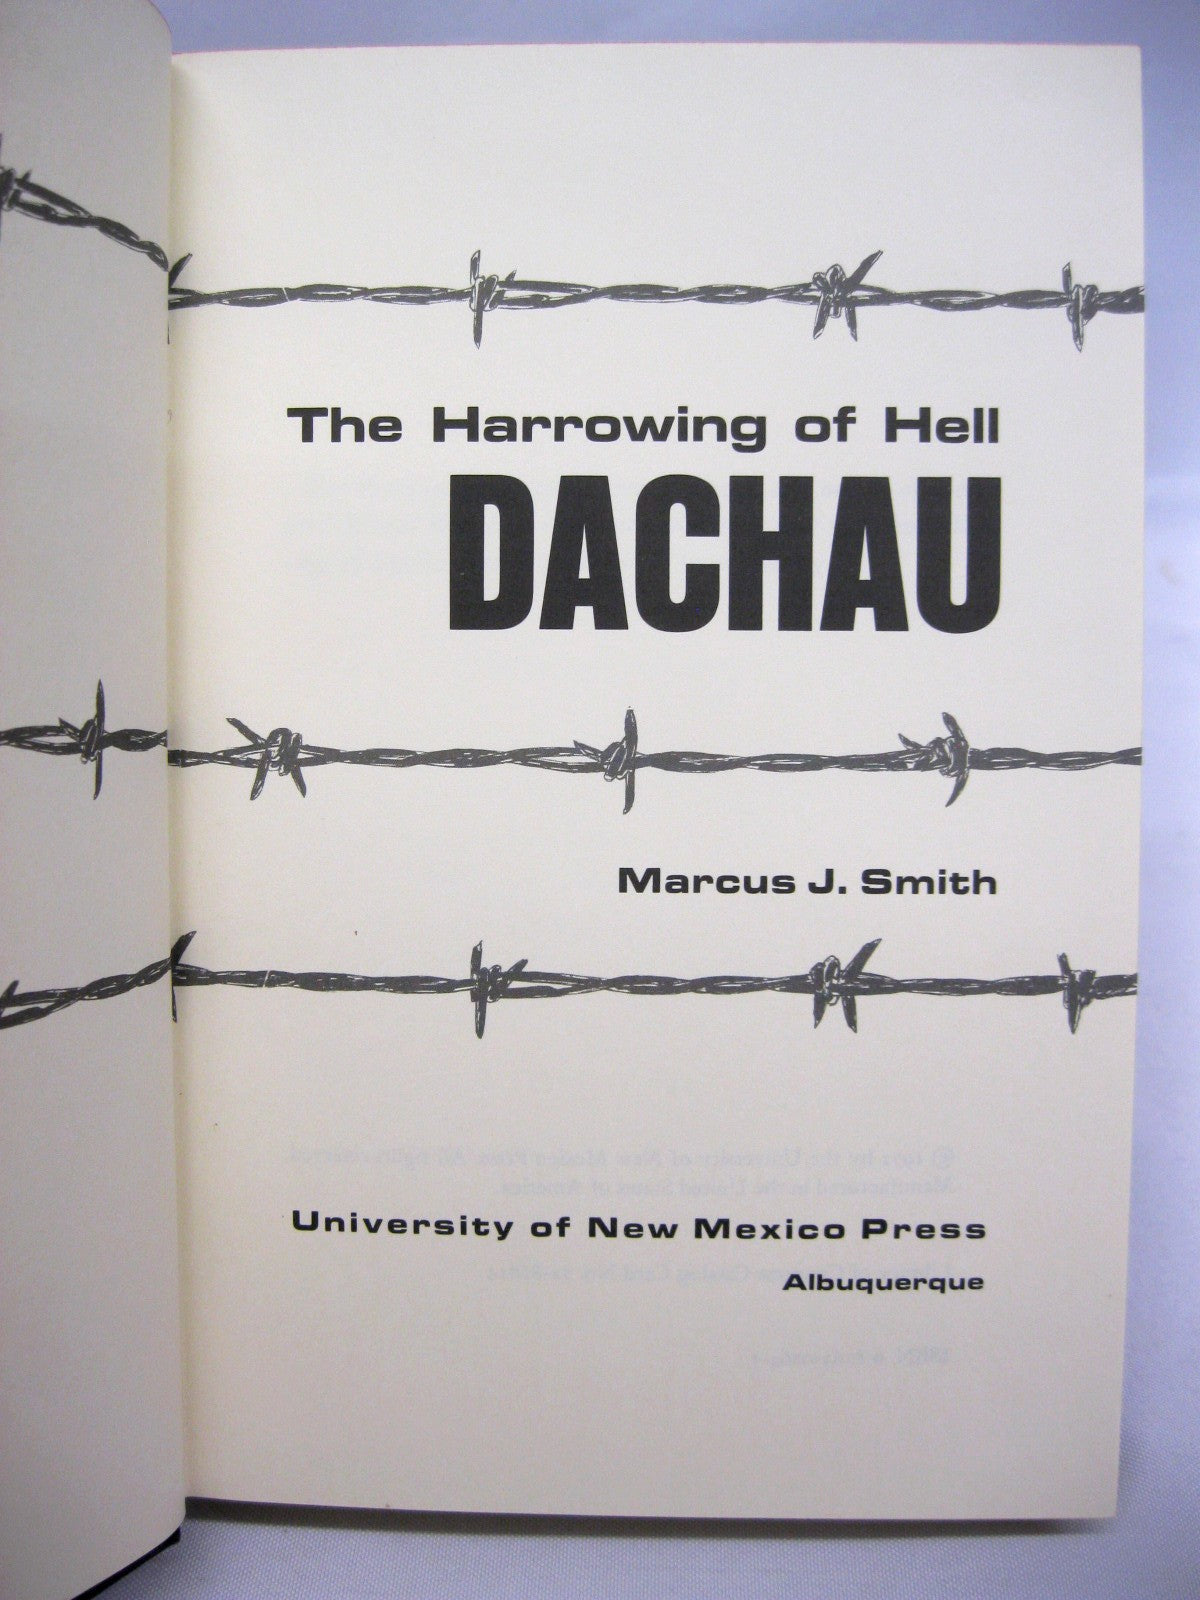 Dachau: The Harrowing of Hell by Marcus J. Smith